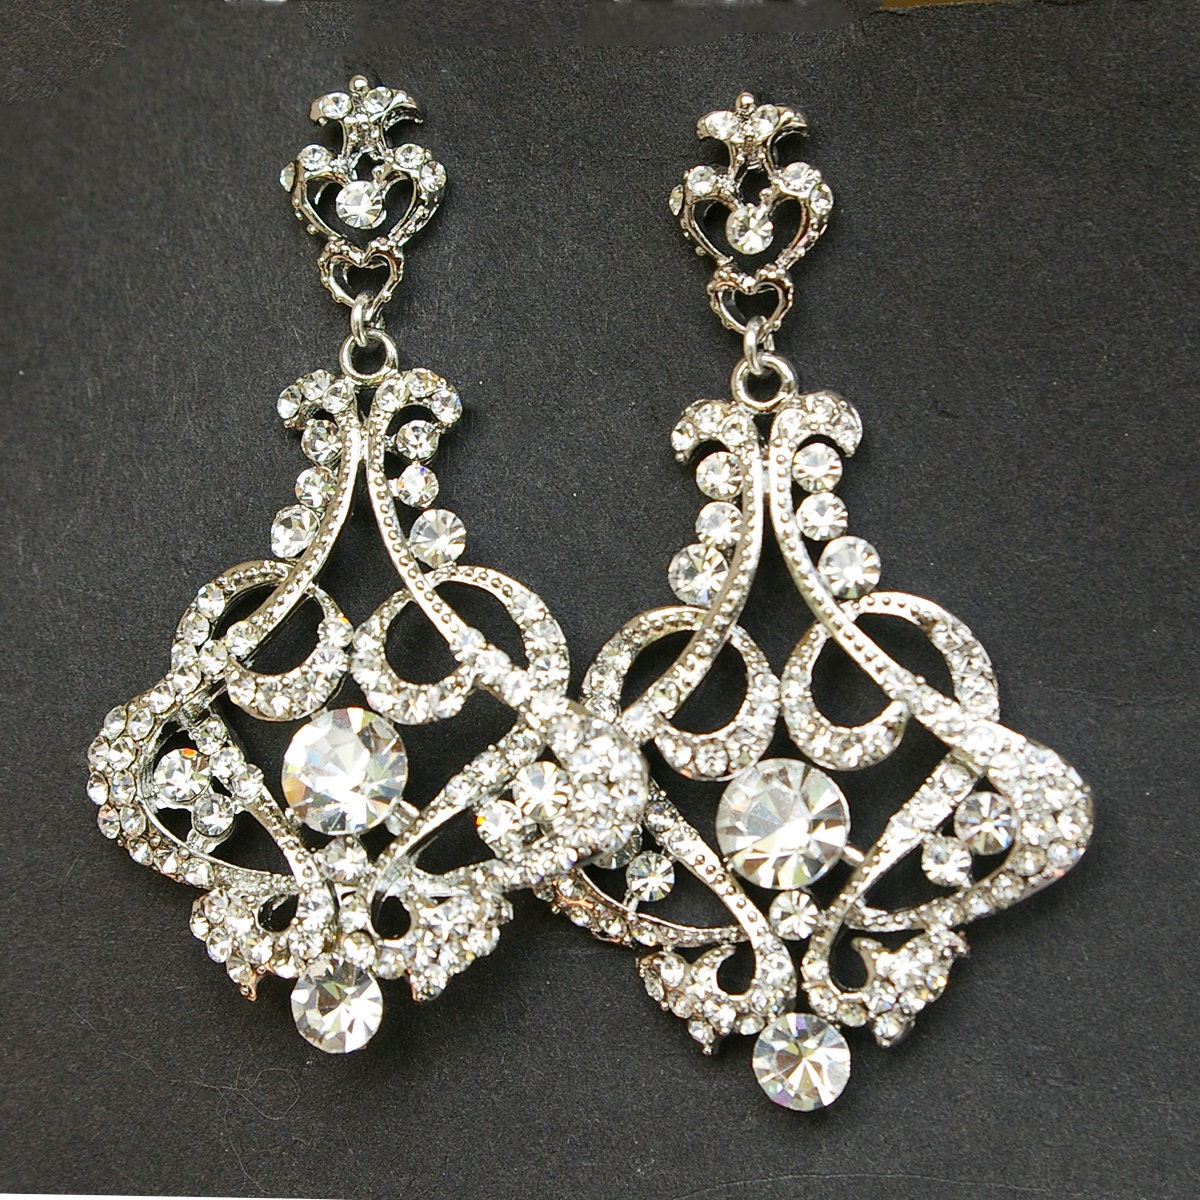 Crystal Chandelier Bridal Earrings Vintage Style by luxedeluxe